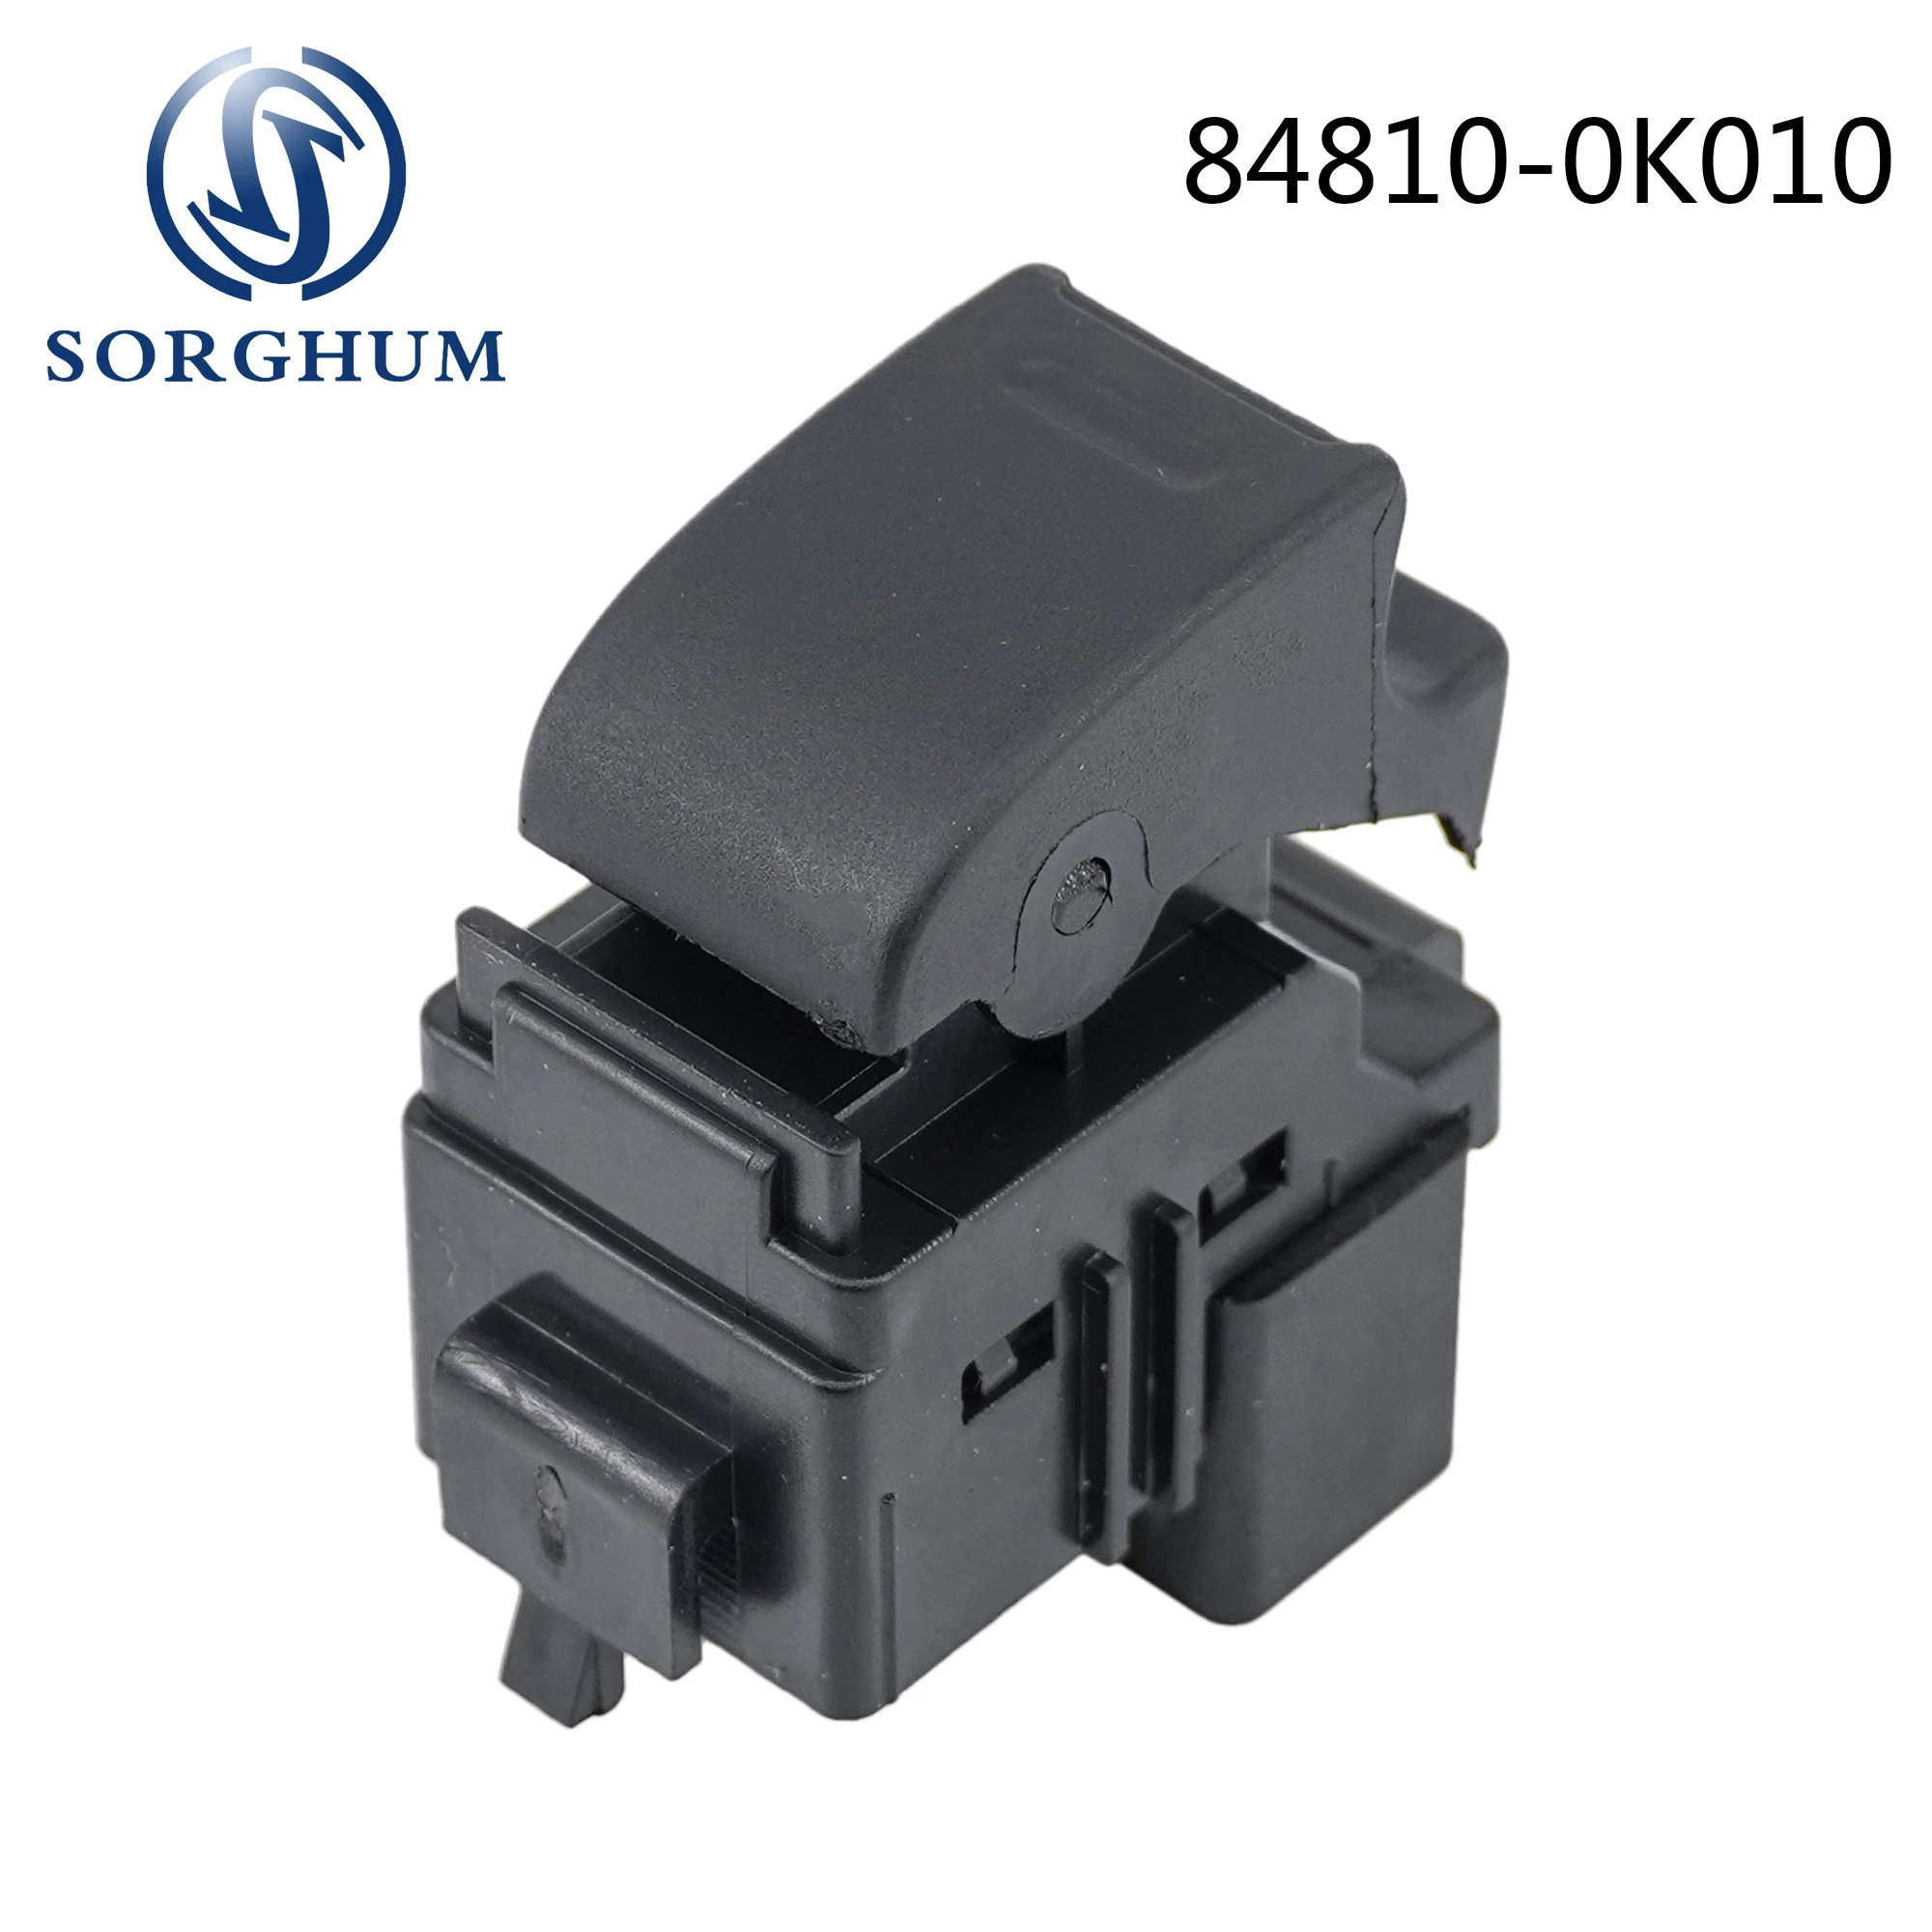 

Sorghum Passenger Side Power Window Control Switch Button Regulator 84810-0K010 For Toyota Hilux Vigo 2004-2011